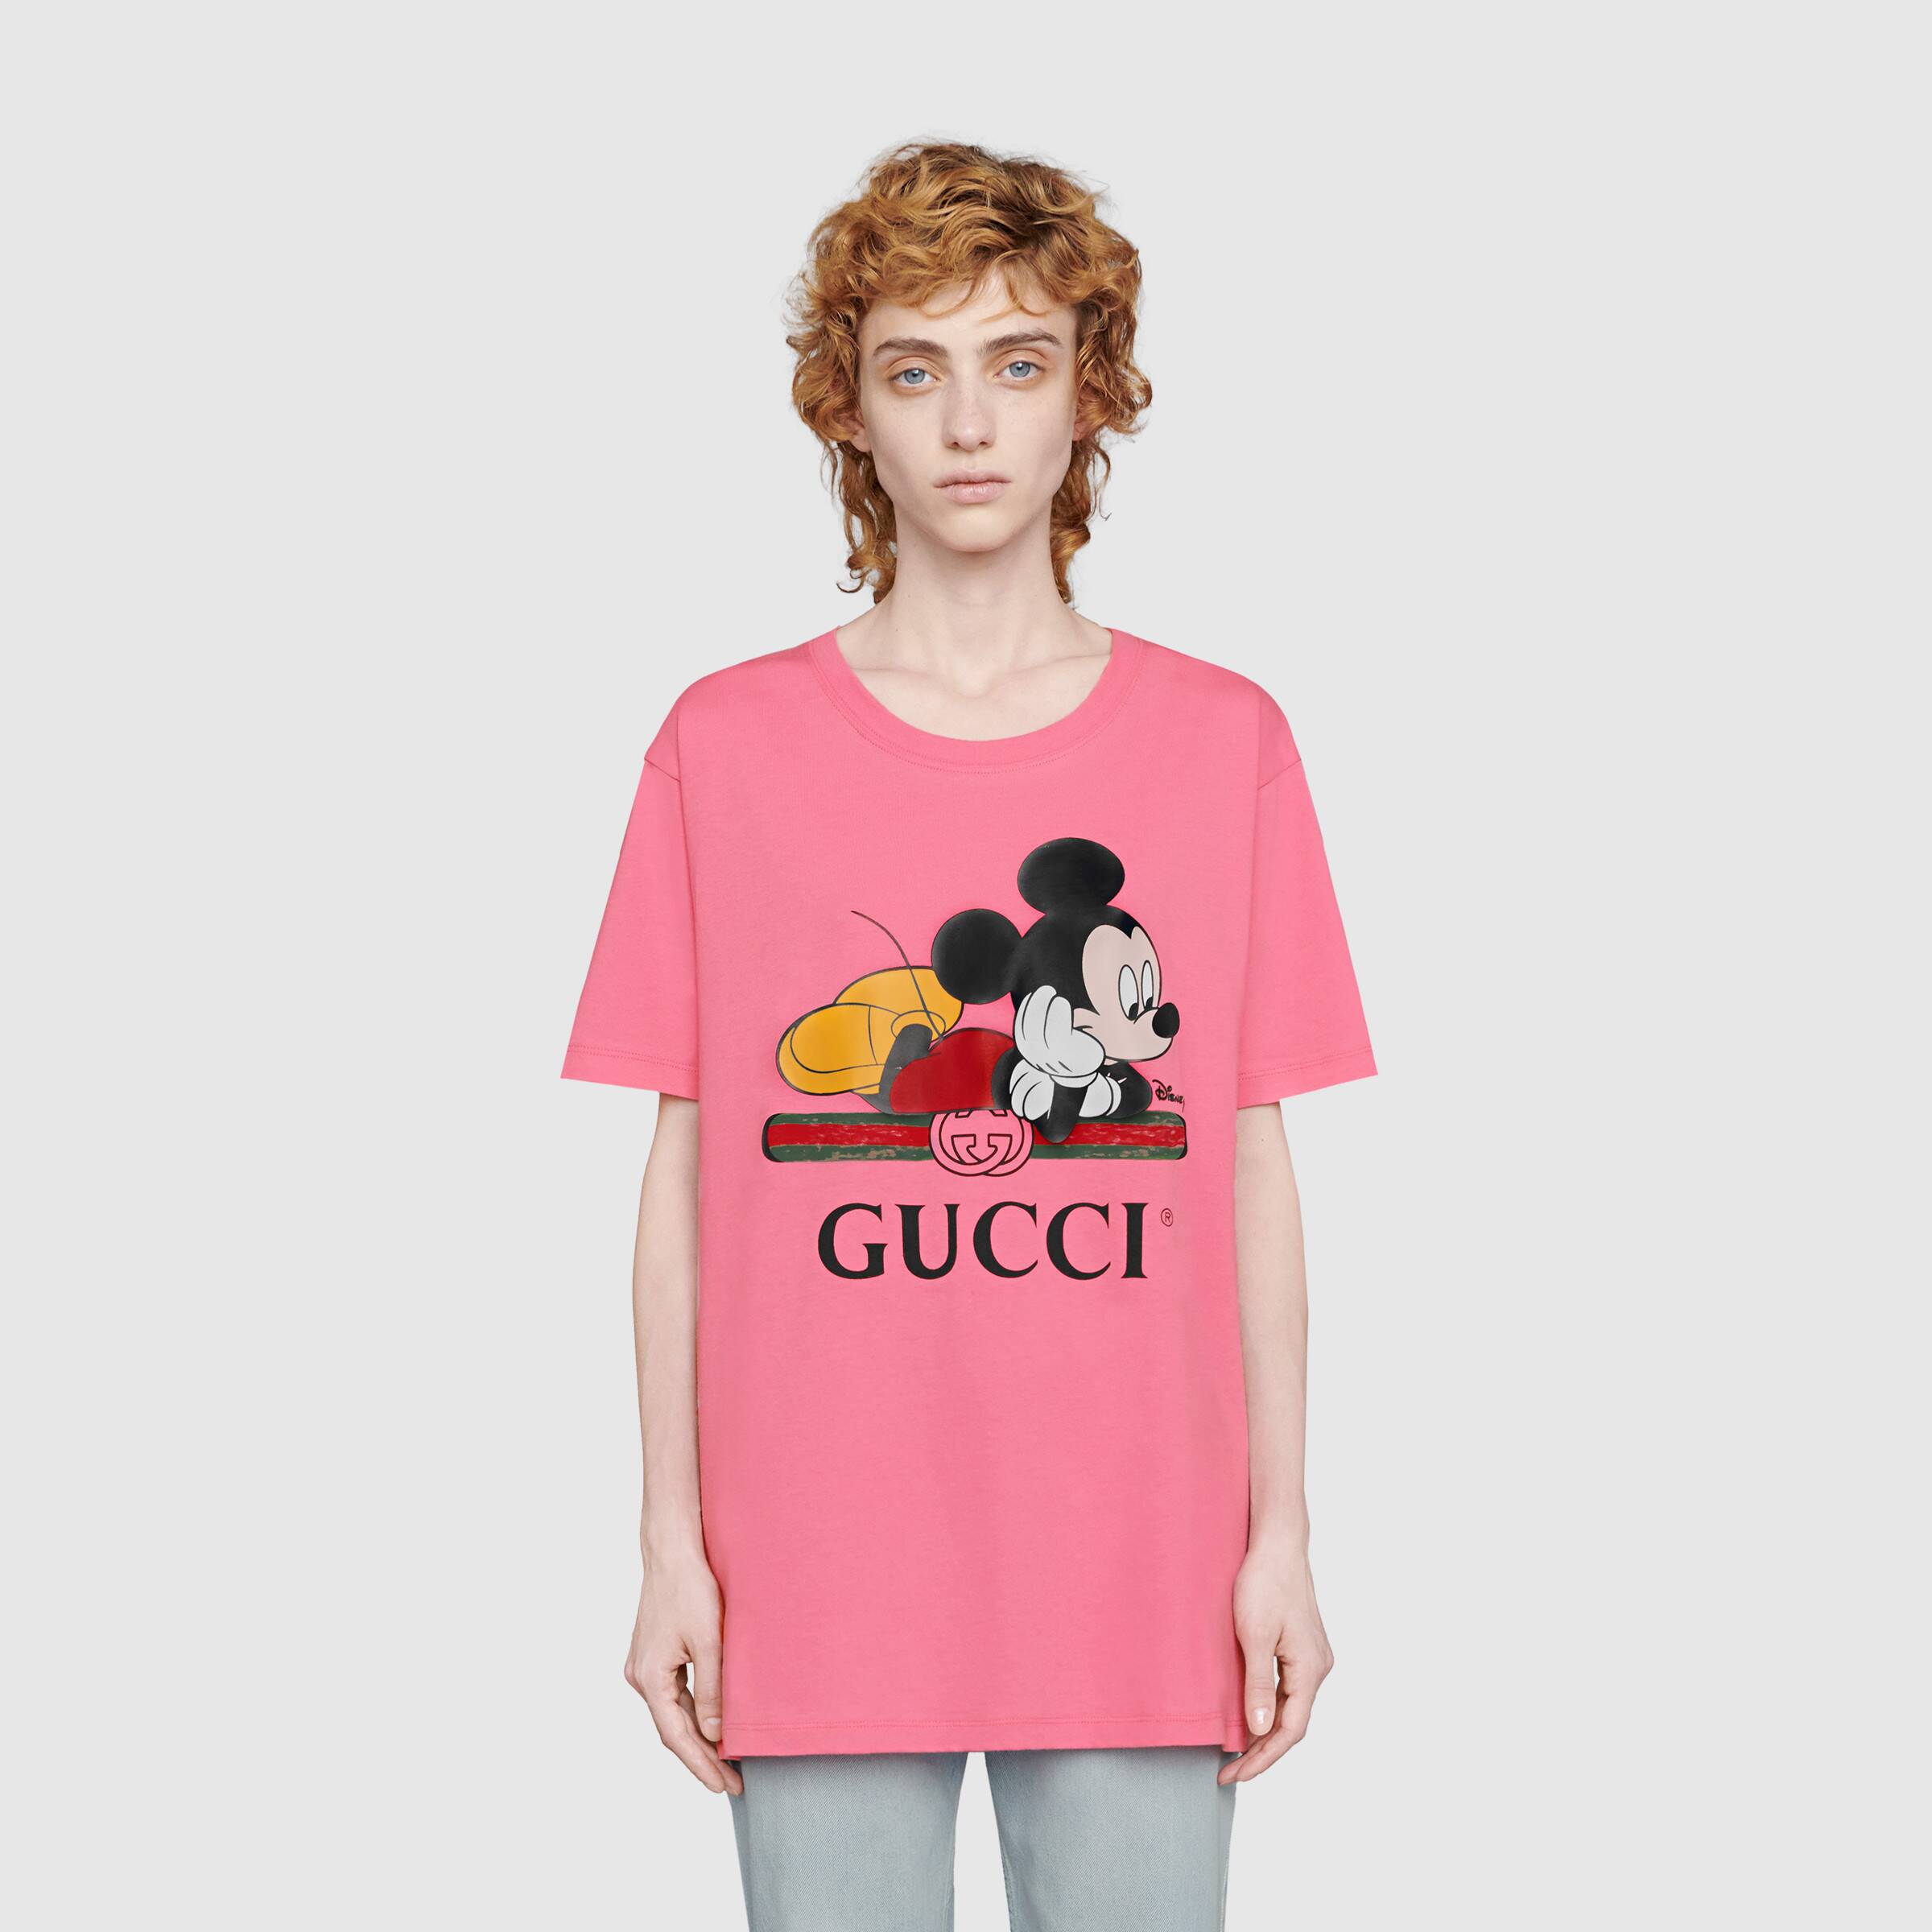 Gucci x Disney oversize T-shirt | Duyet Fashion